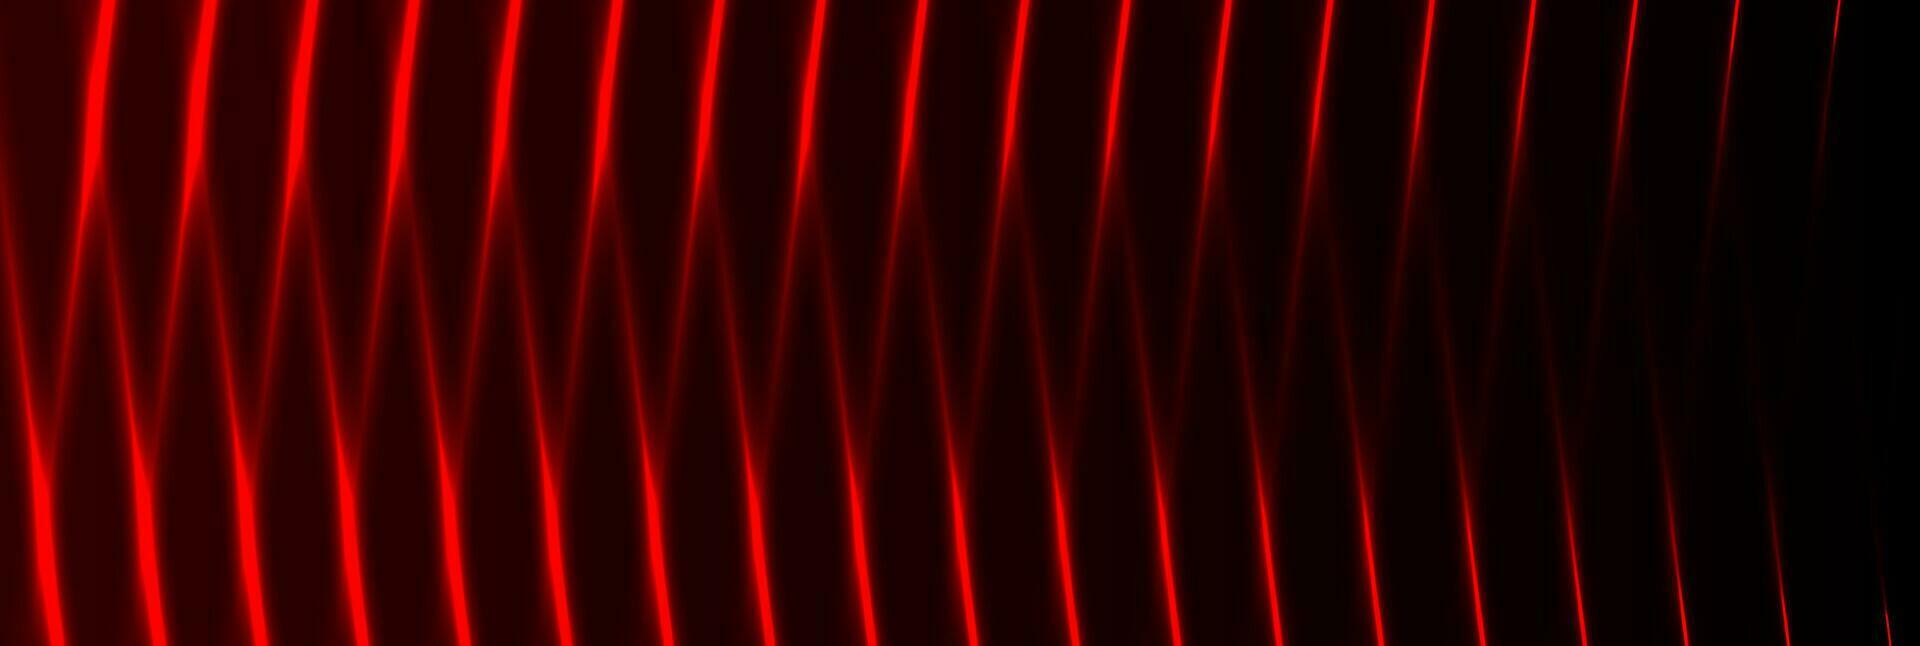 rood neon laser lijnen abstract achtergrond vector